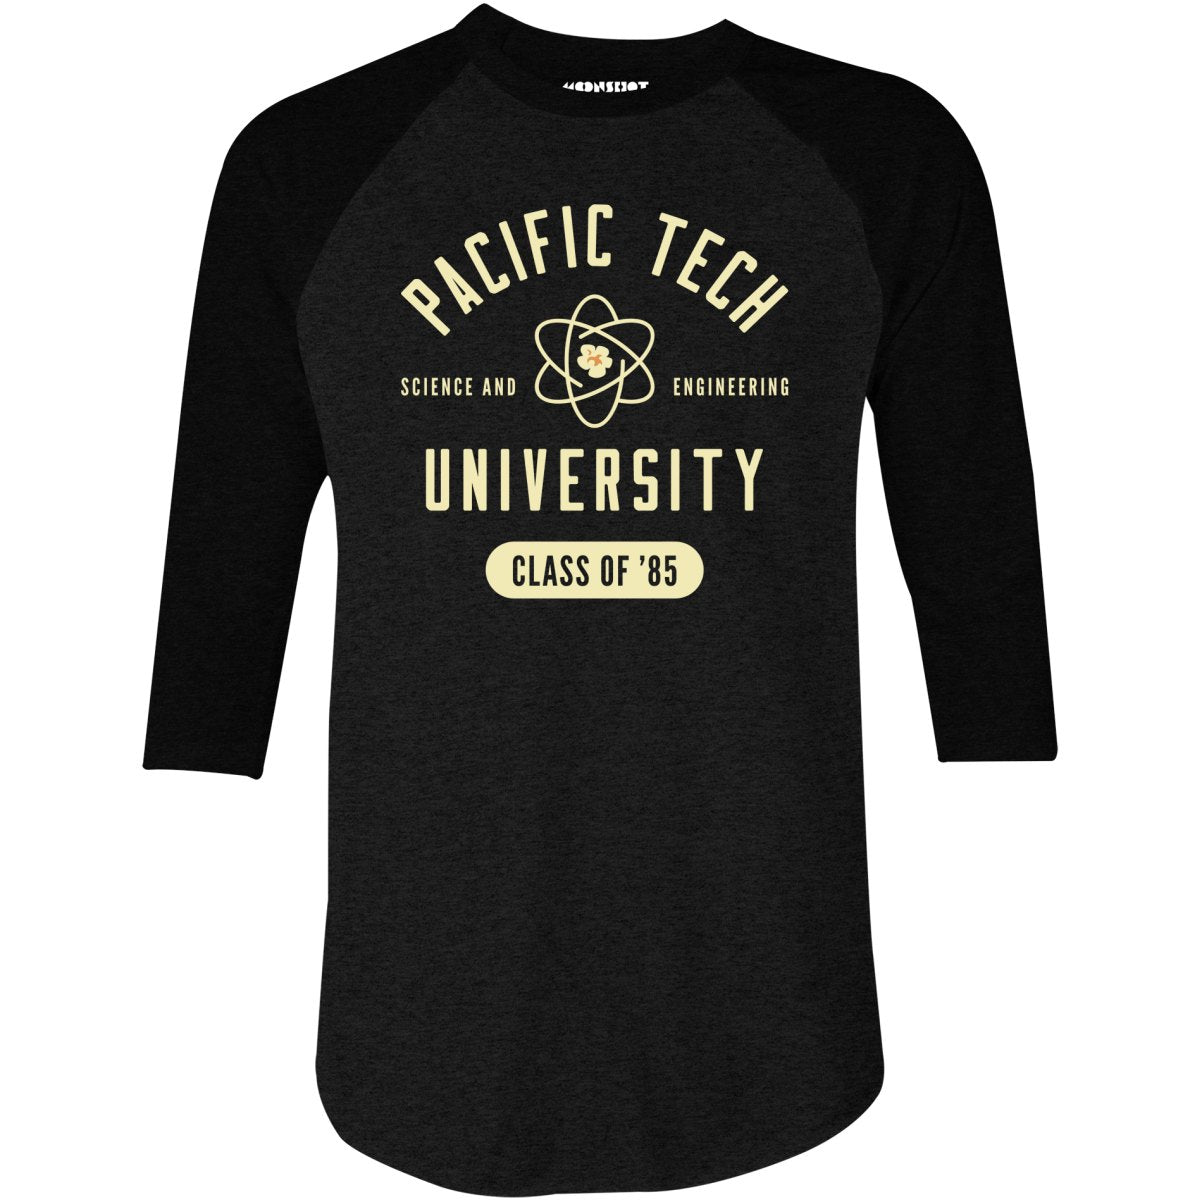 Real Genius - Pacific Tech University - 3/4 Sleeve Raglan T-Shirt ...